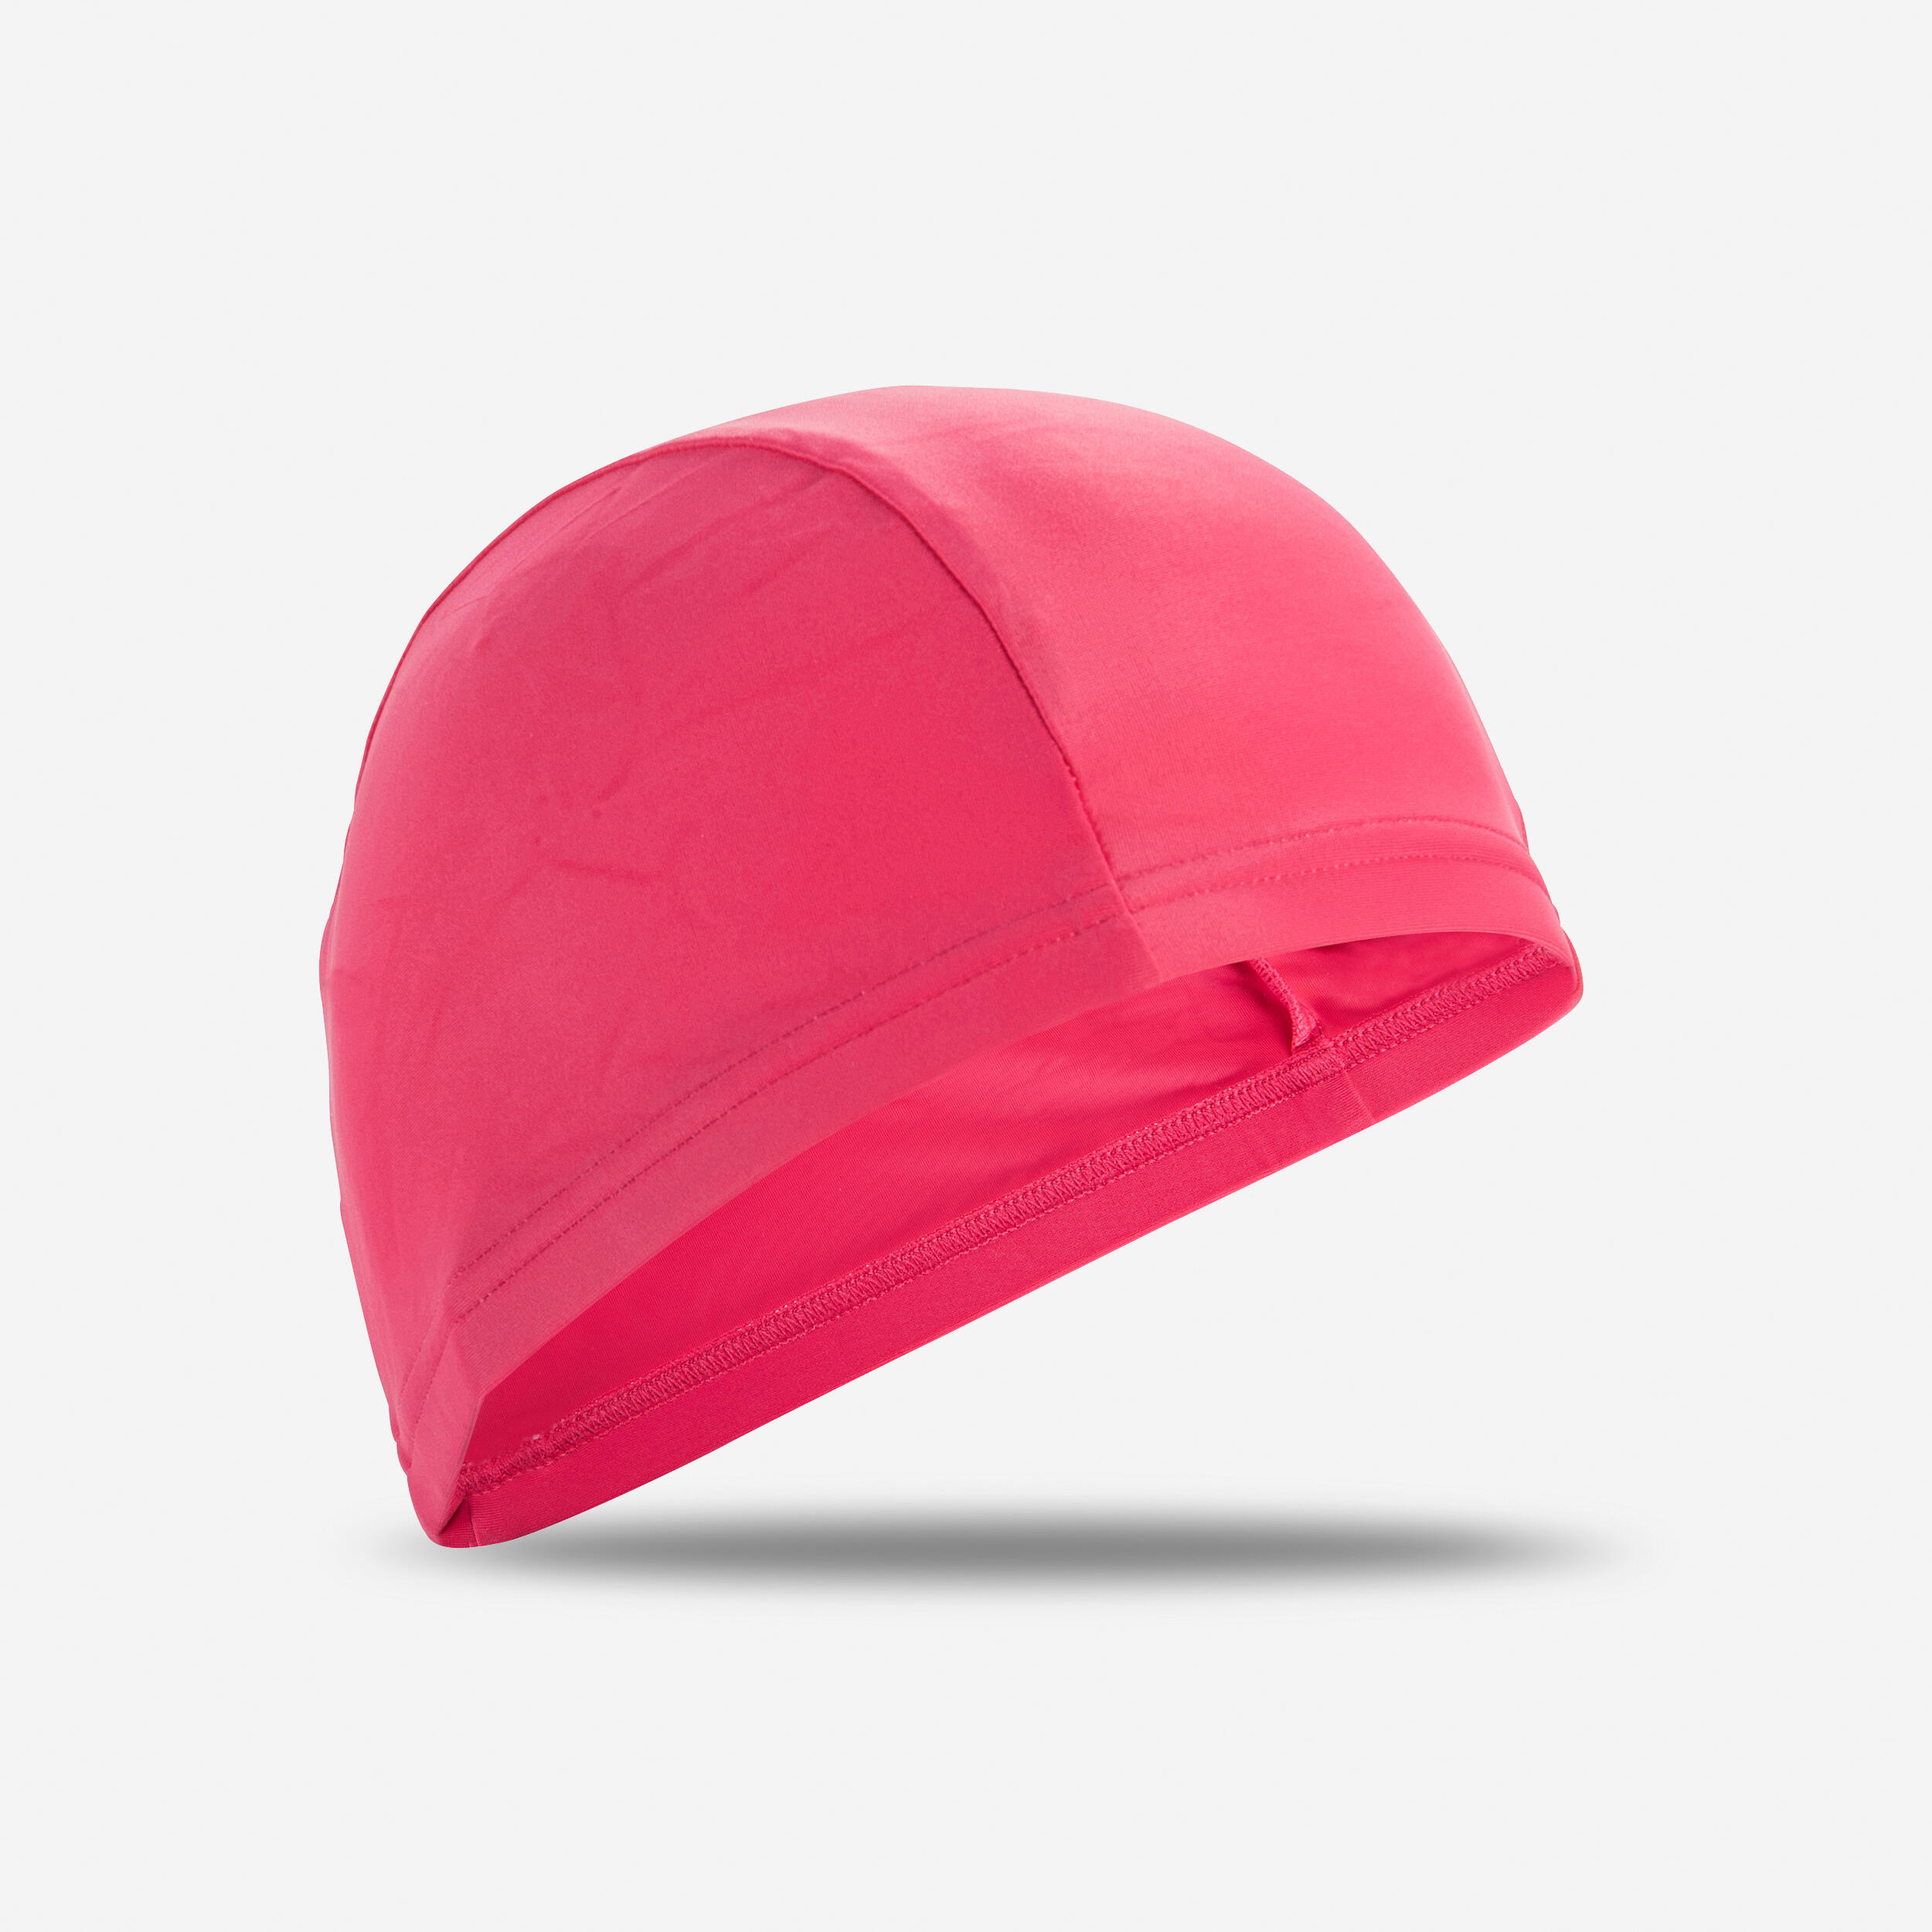 Mesh swim cap - plain fabric - pink NABAIJI